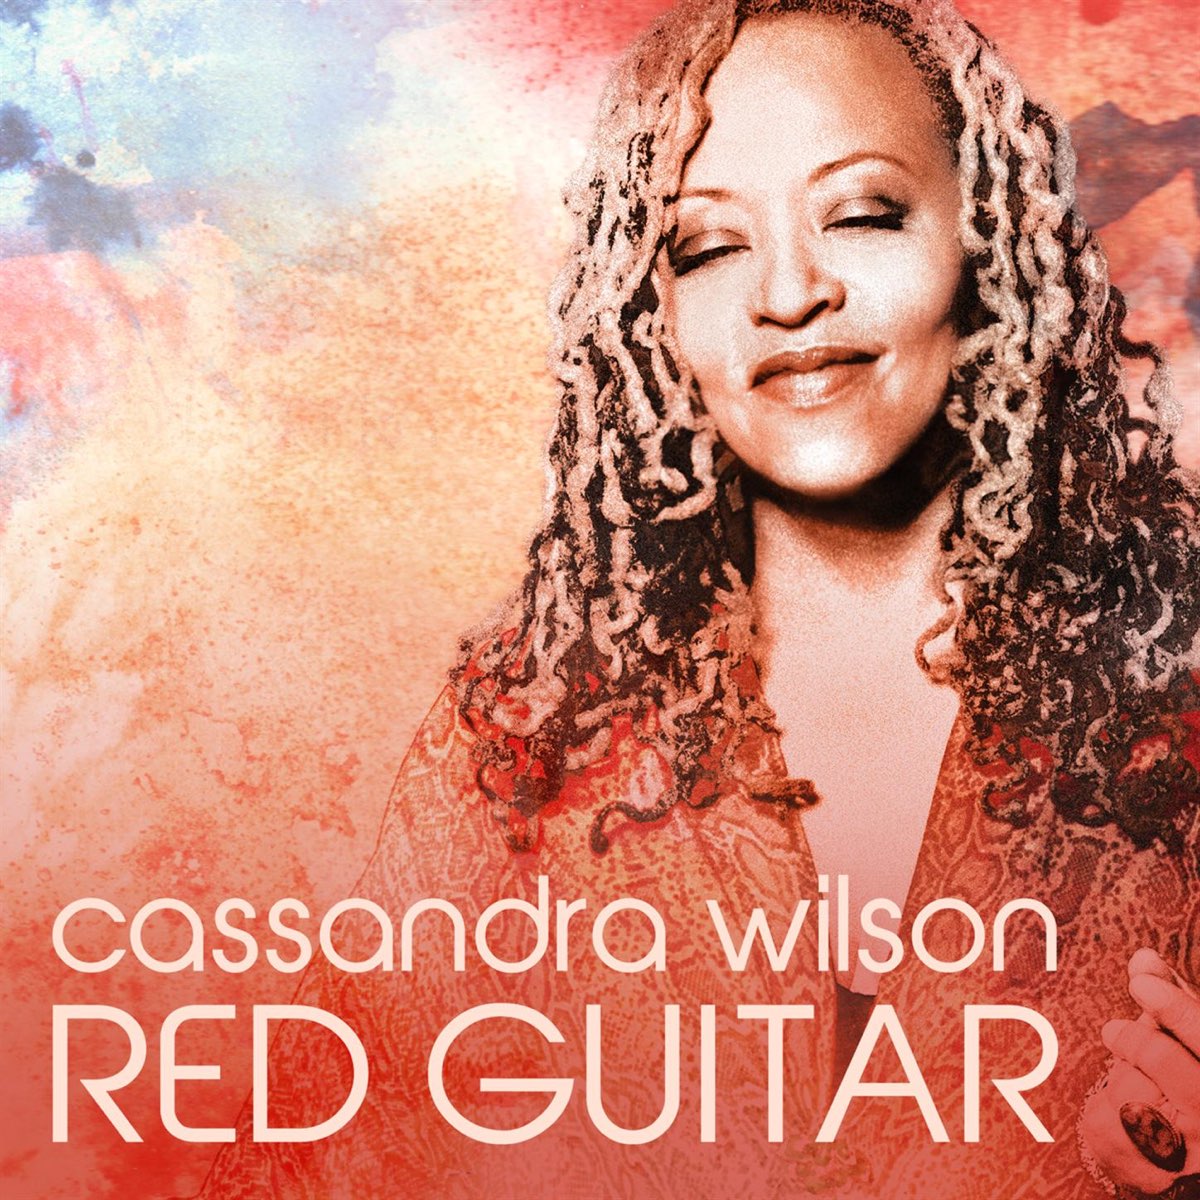 Red Guitar - Single - Album by Cassandra Wilson - Apple Music